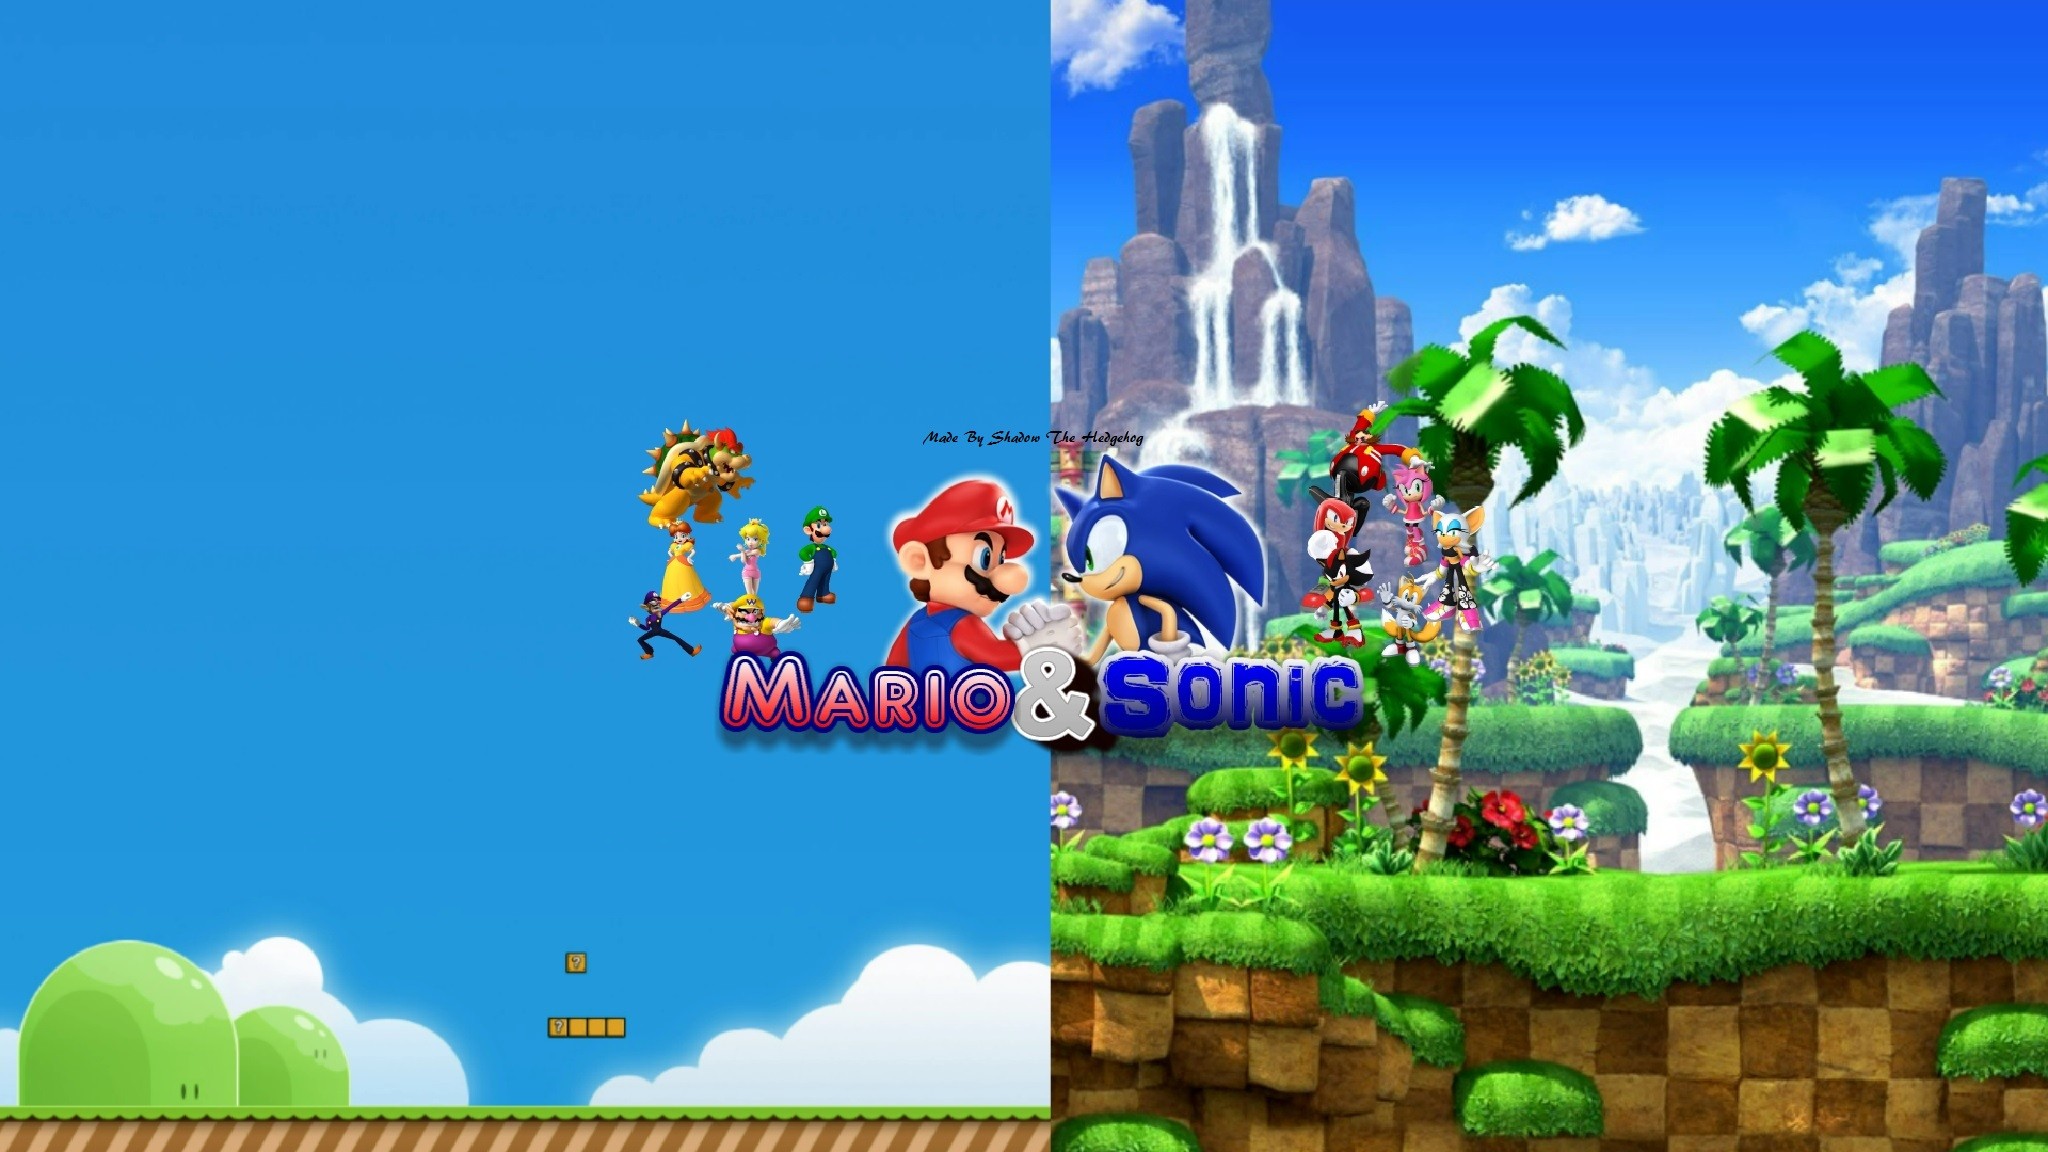 2048x1152 Mario and Sonic by ShadowTheHedgehog24 Mario and Sonic by  ShadowTheHedgehog24